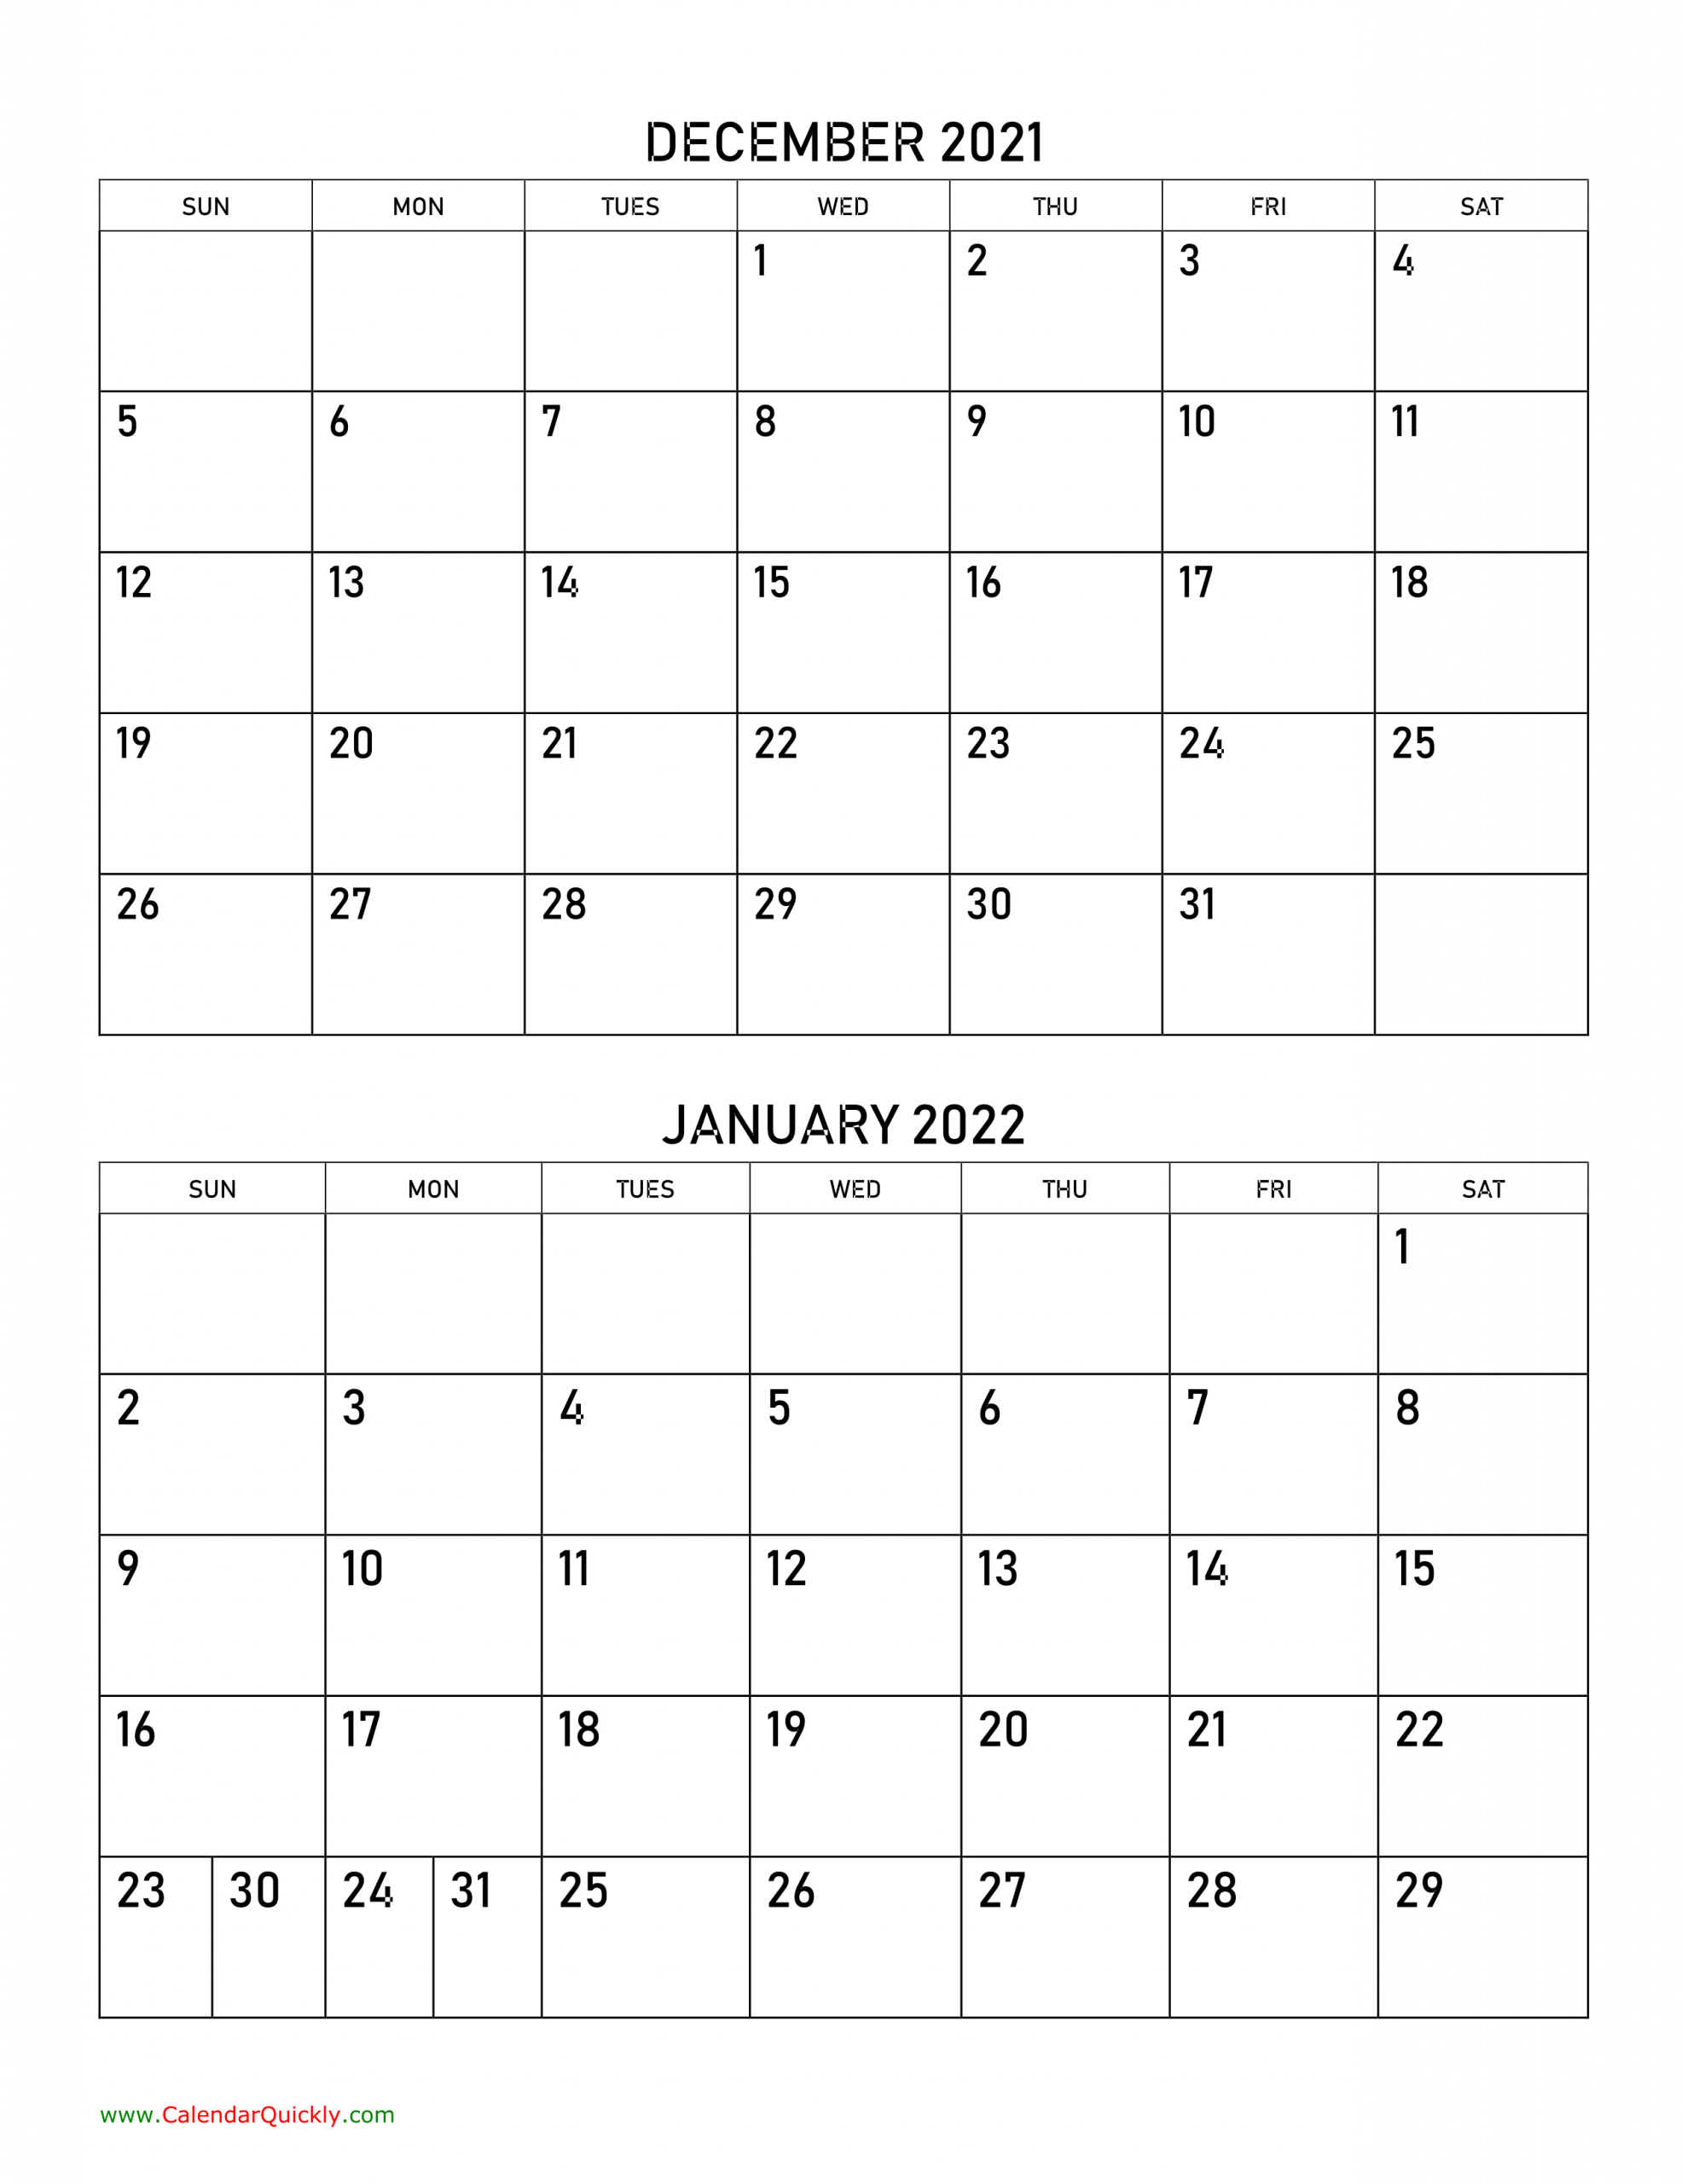 December 2021 And January 2022 Calendar | Calendar Quickly 3 Month Calendar November December January 2021